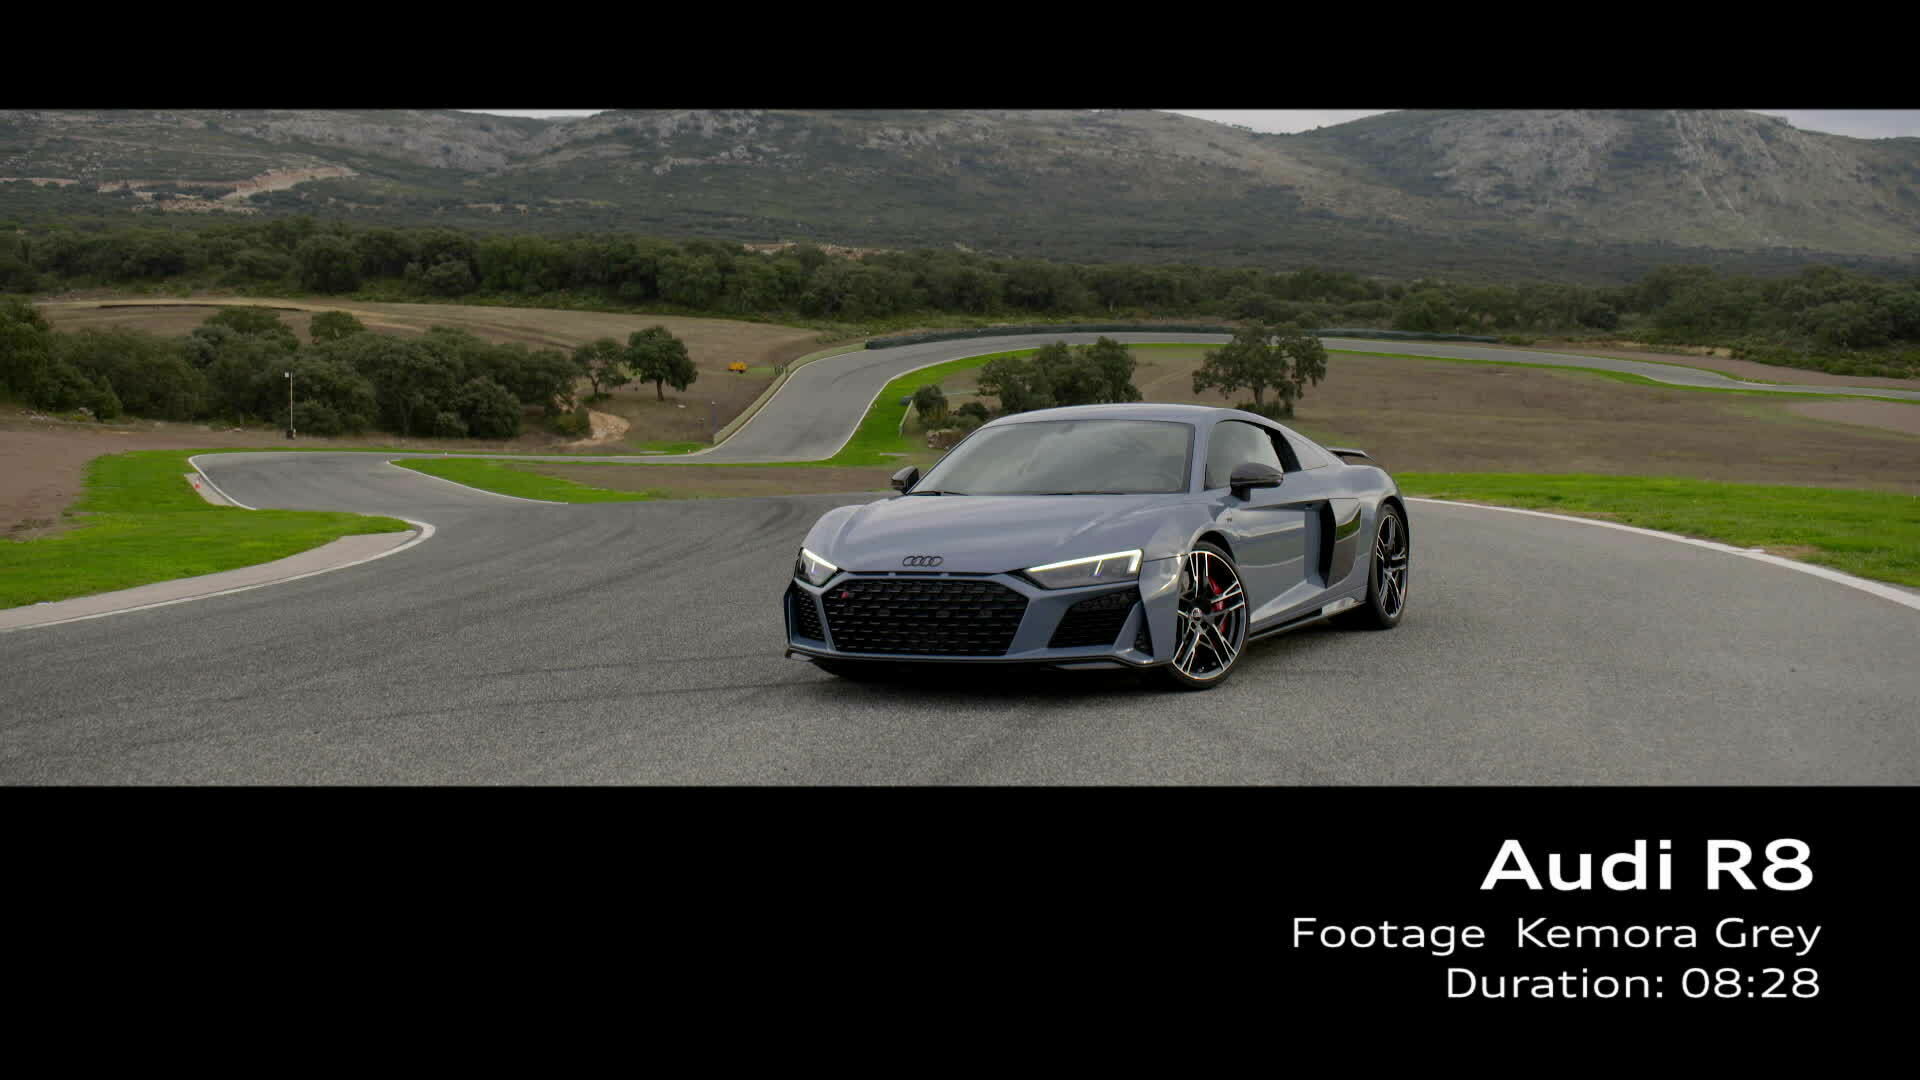 Audi R8 Footage Kemora Grey